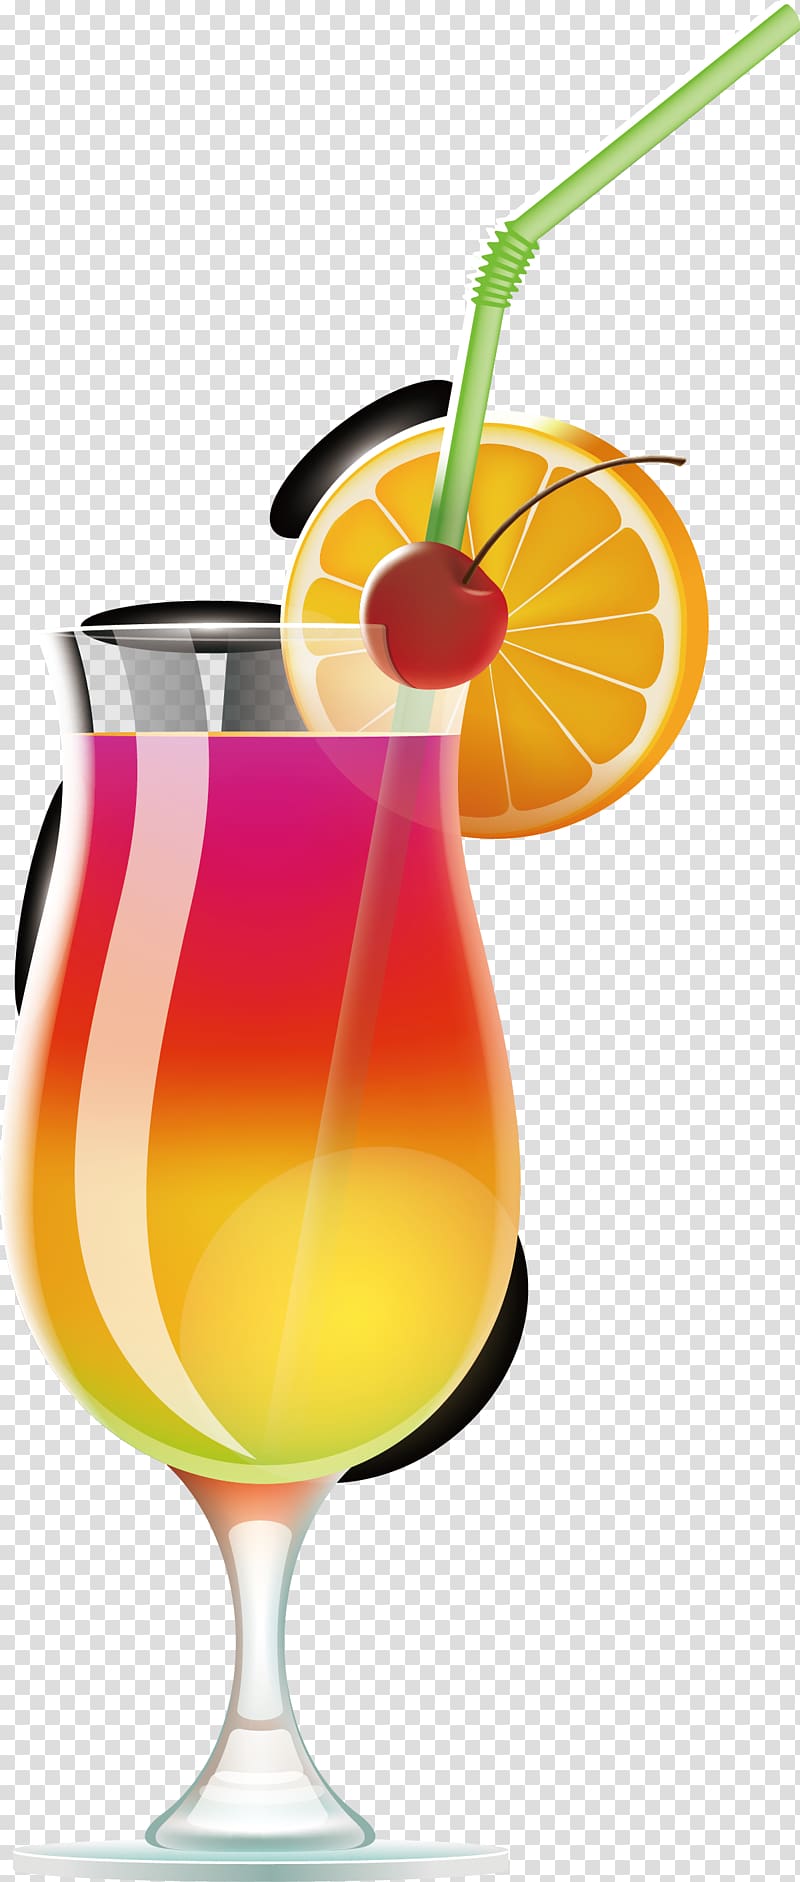 Wine cocktail Juice Tequila Sunrise Margarita, Summer drinks transparent background PNG clipart